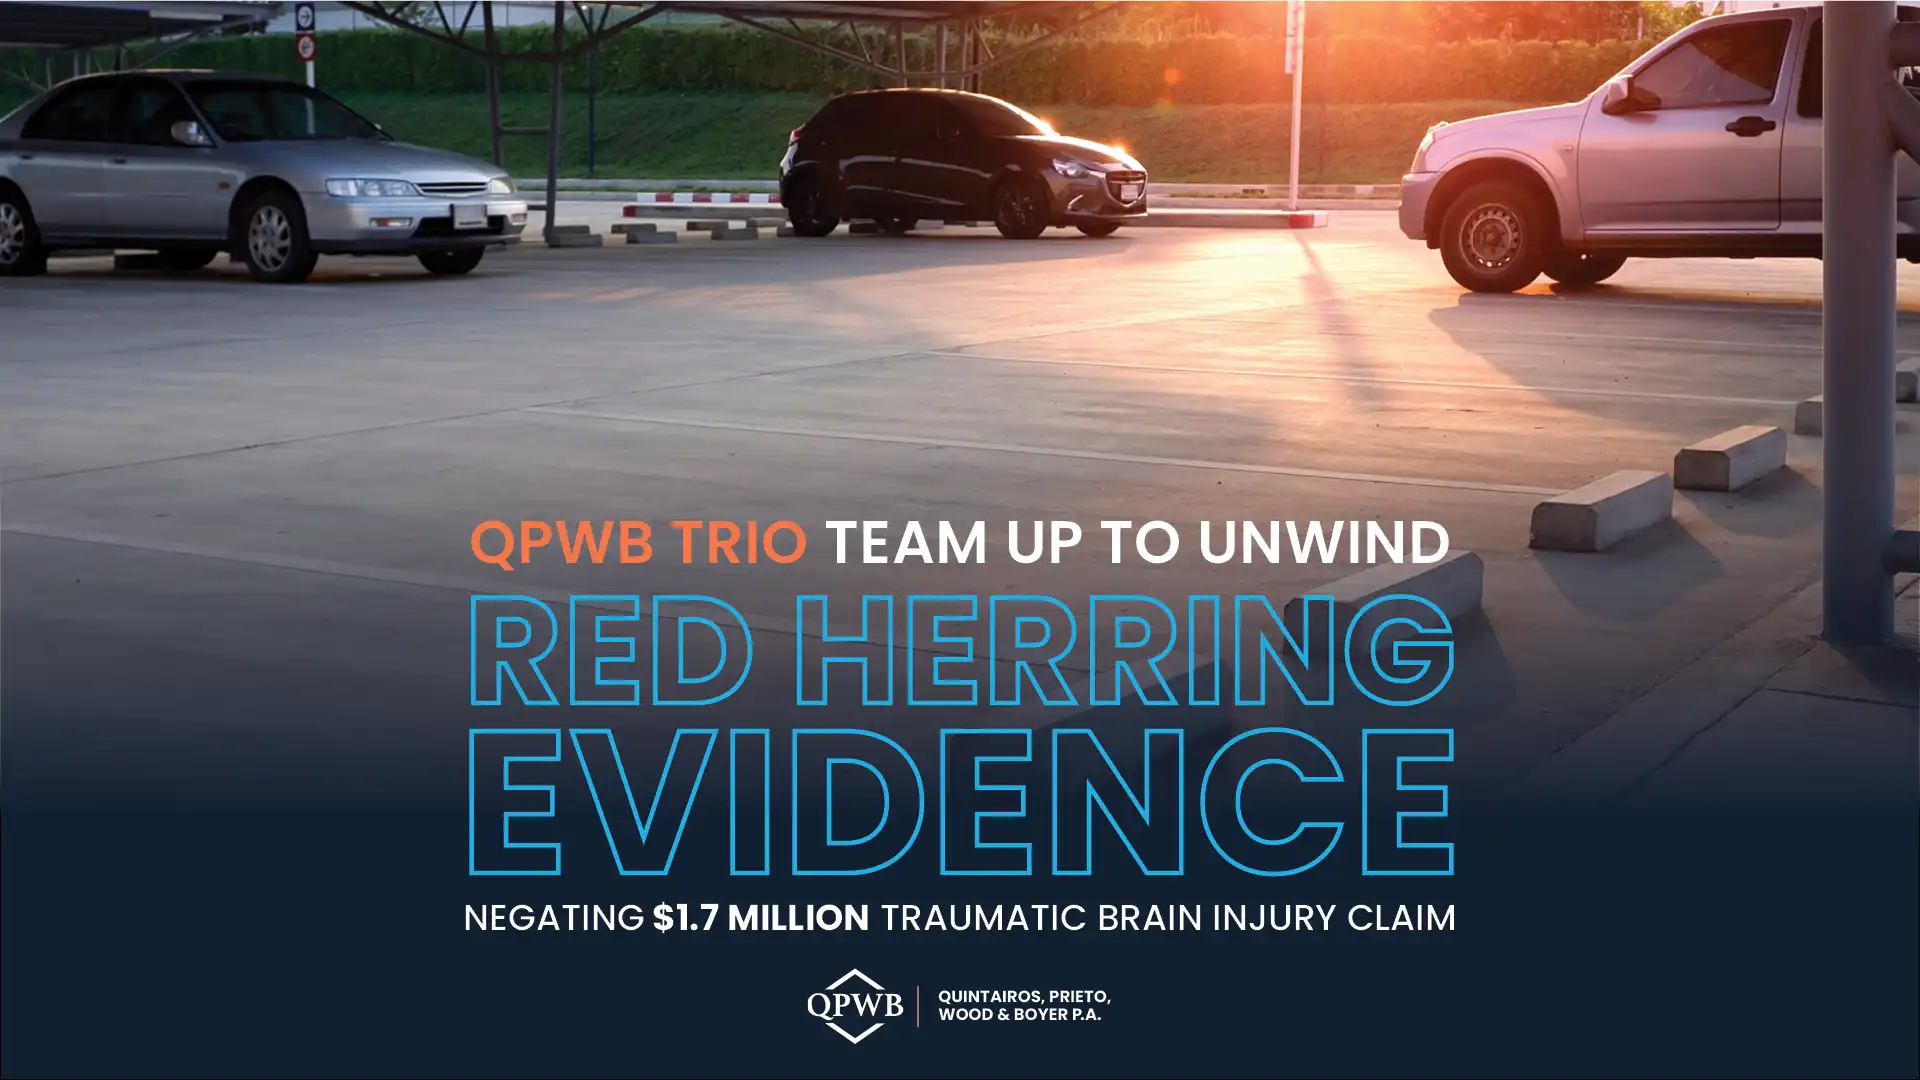 QPWB Trio Team Up to Unwind Red Herring Evidence Negating $1.7 Million Traumatic Brain Injury Claim